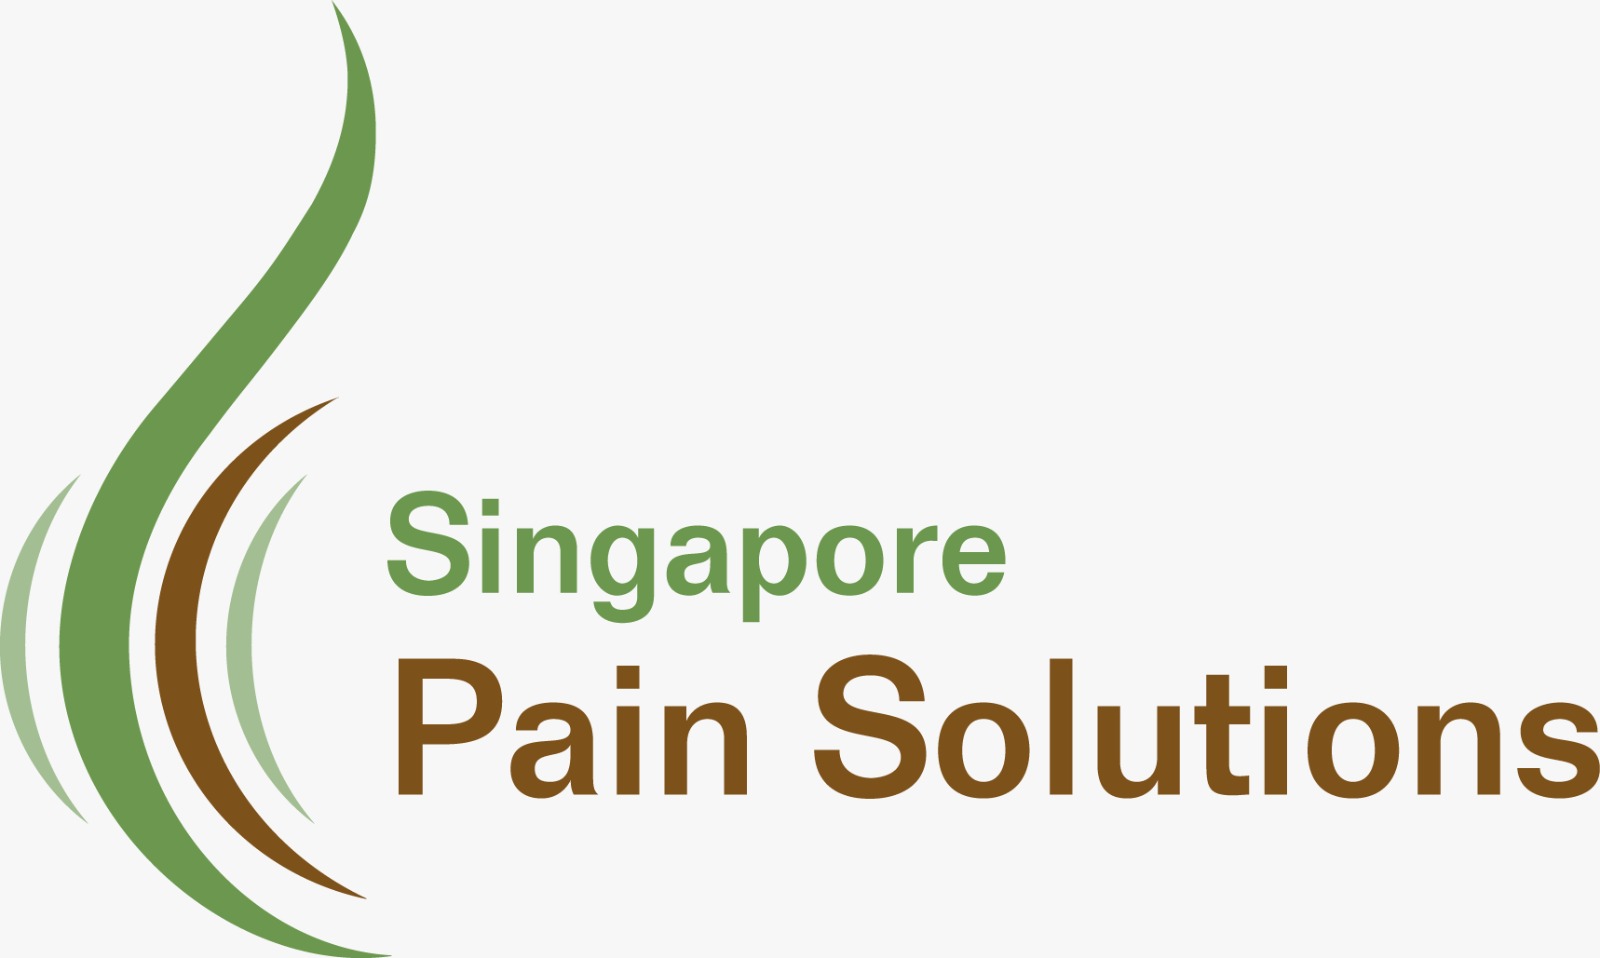 Singapore Pain Solutions Pte. Ltd. company logo